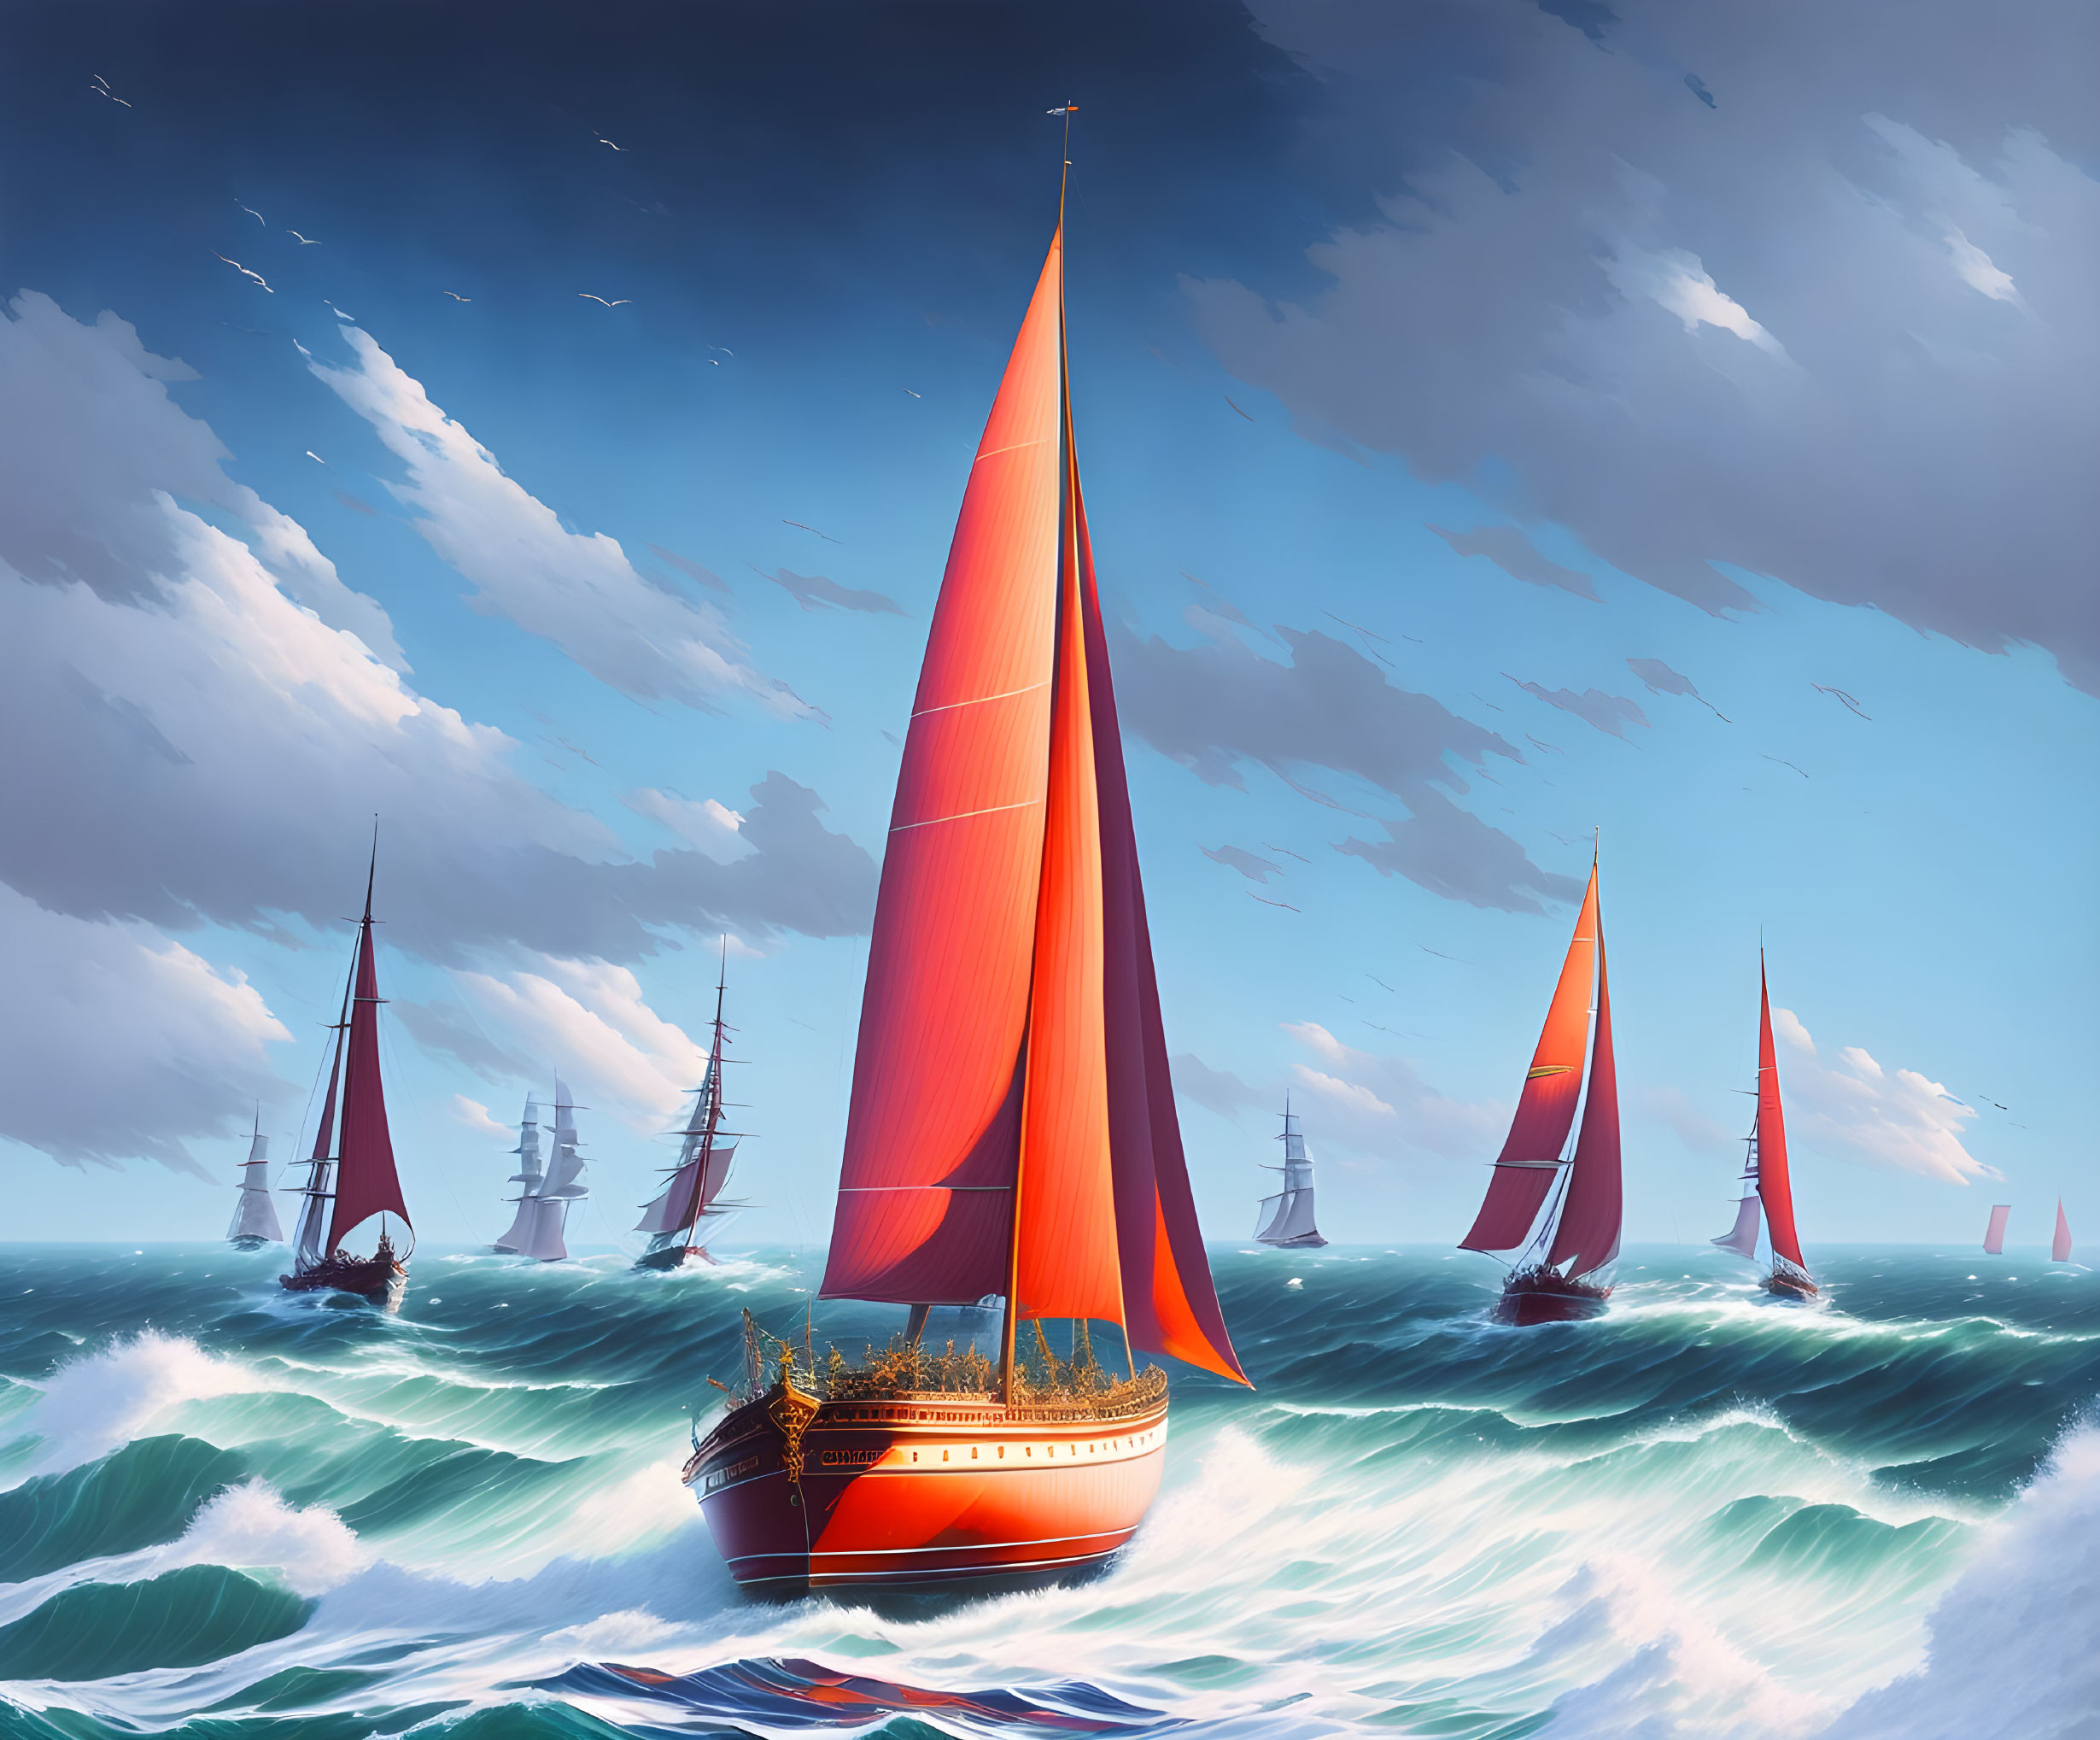 Sailing Through the Crimson Waves